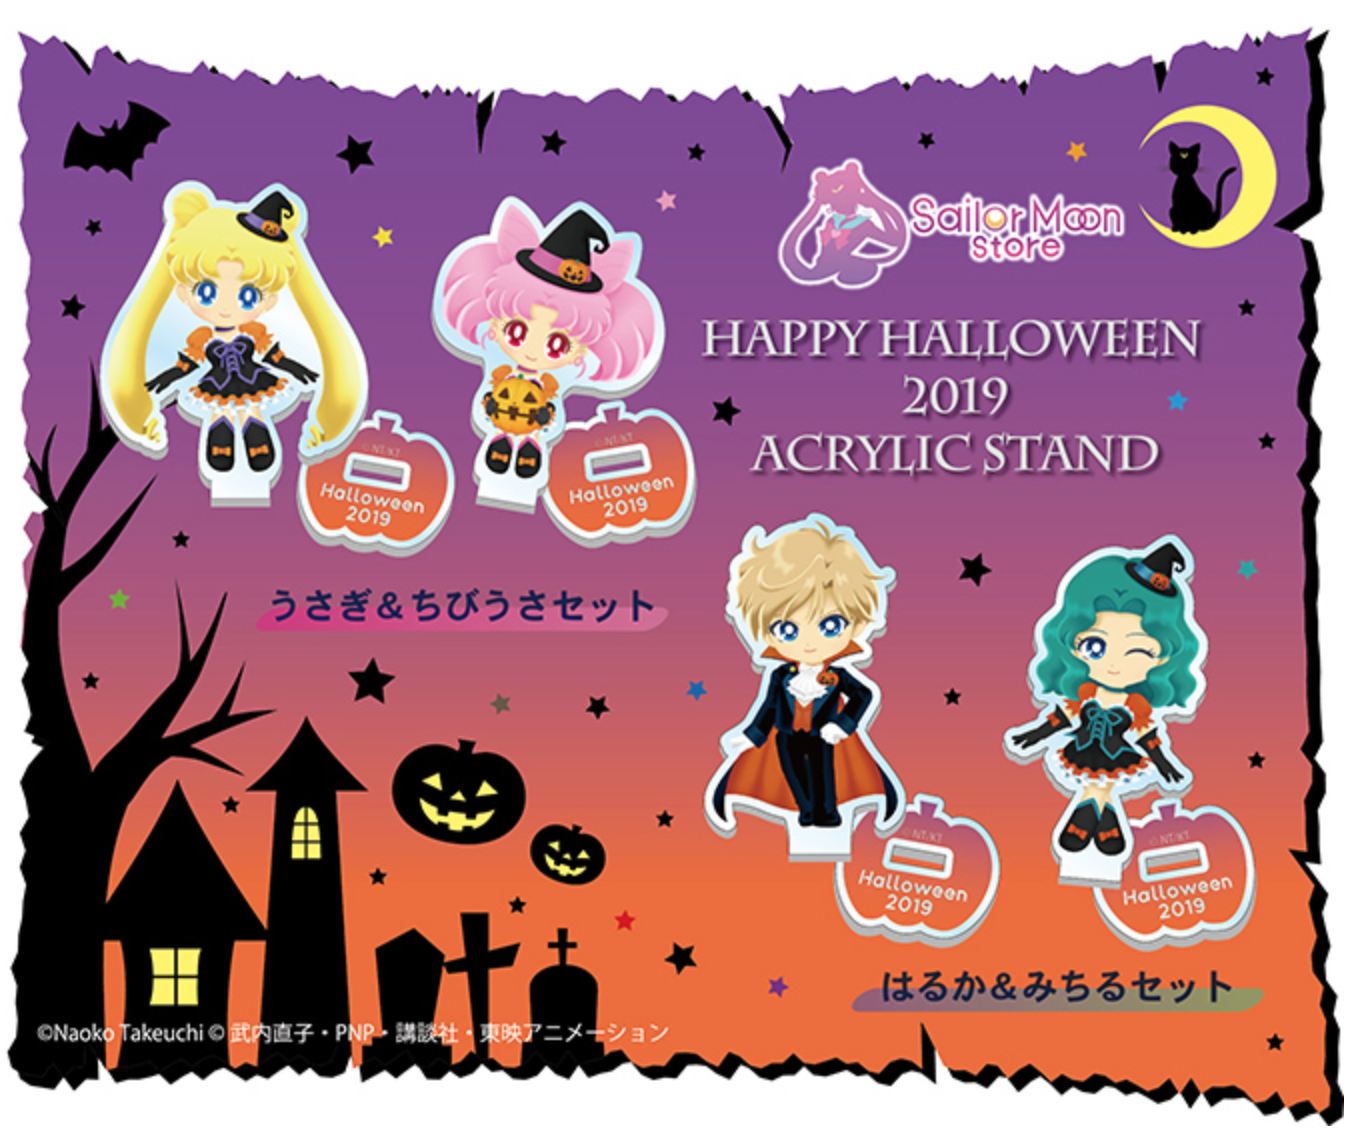 Sailor Moon Store Halloween Acrylic Stands 2019